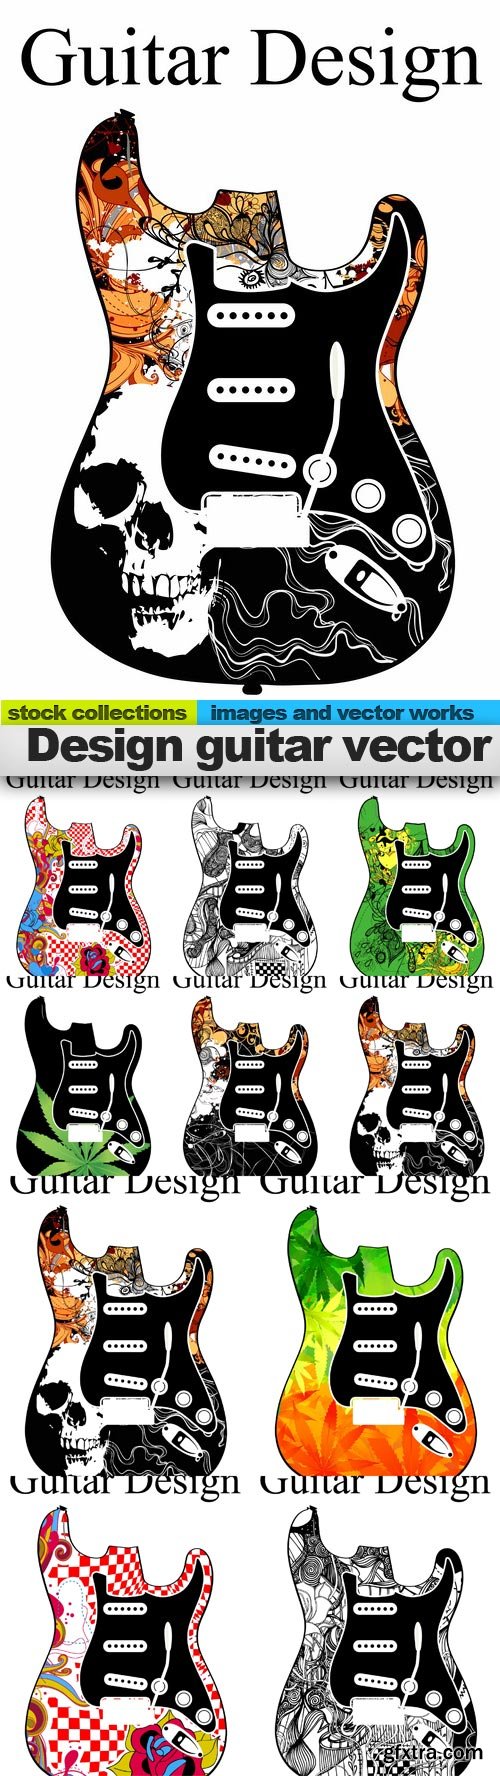 Design guitar vector, 10 x EPS